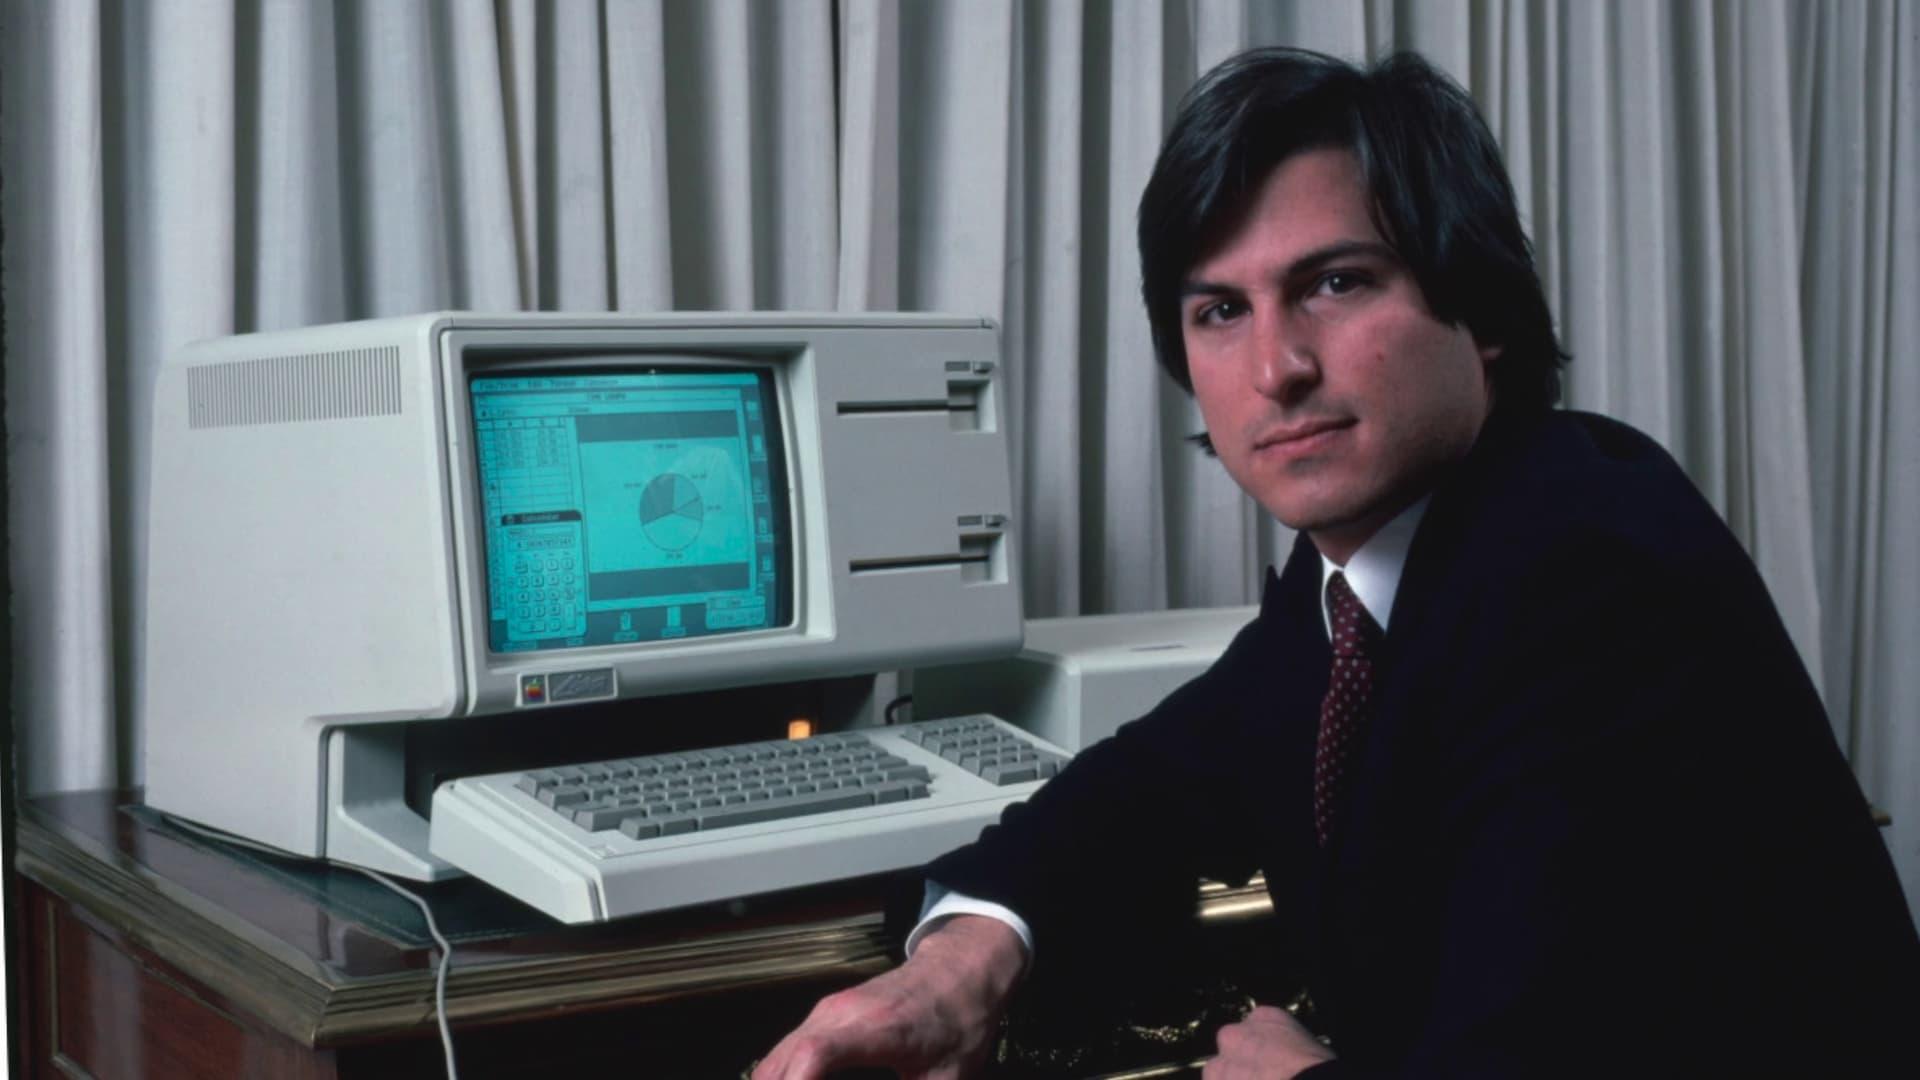 Before Macintosh: The Apple Lisa backdrop